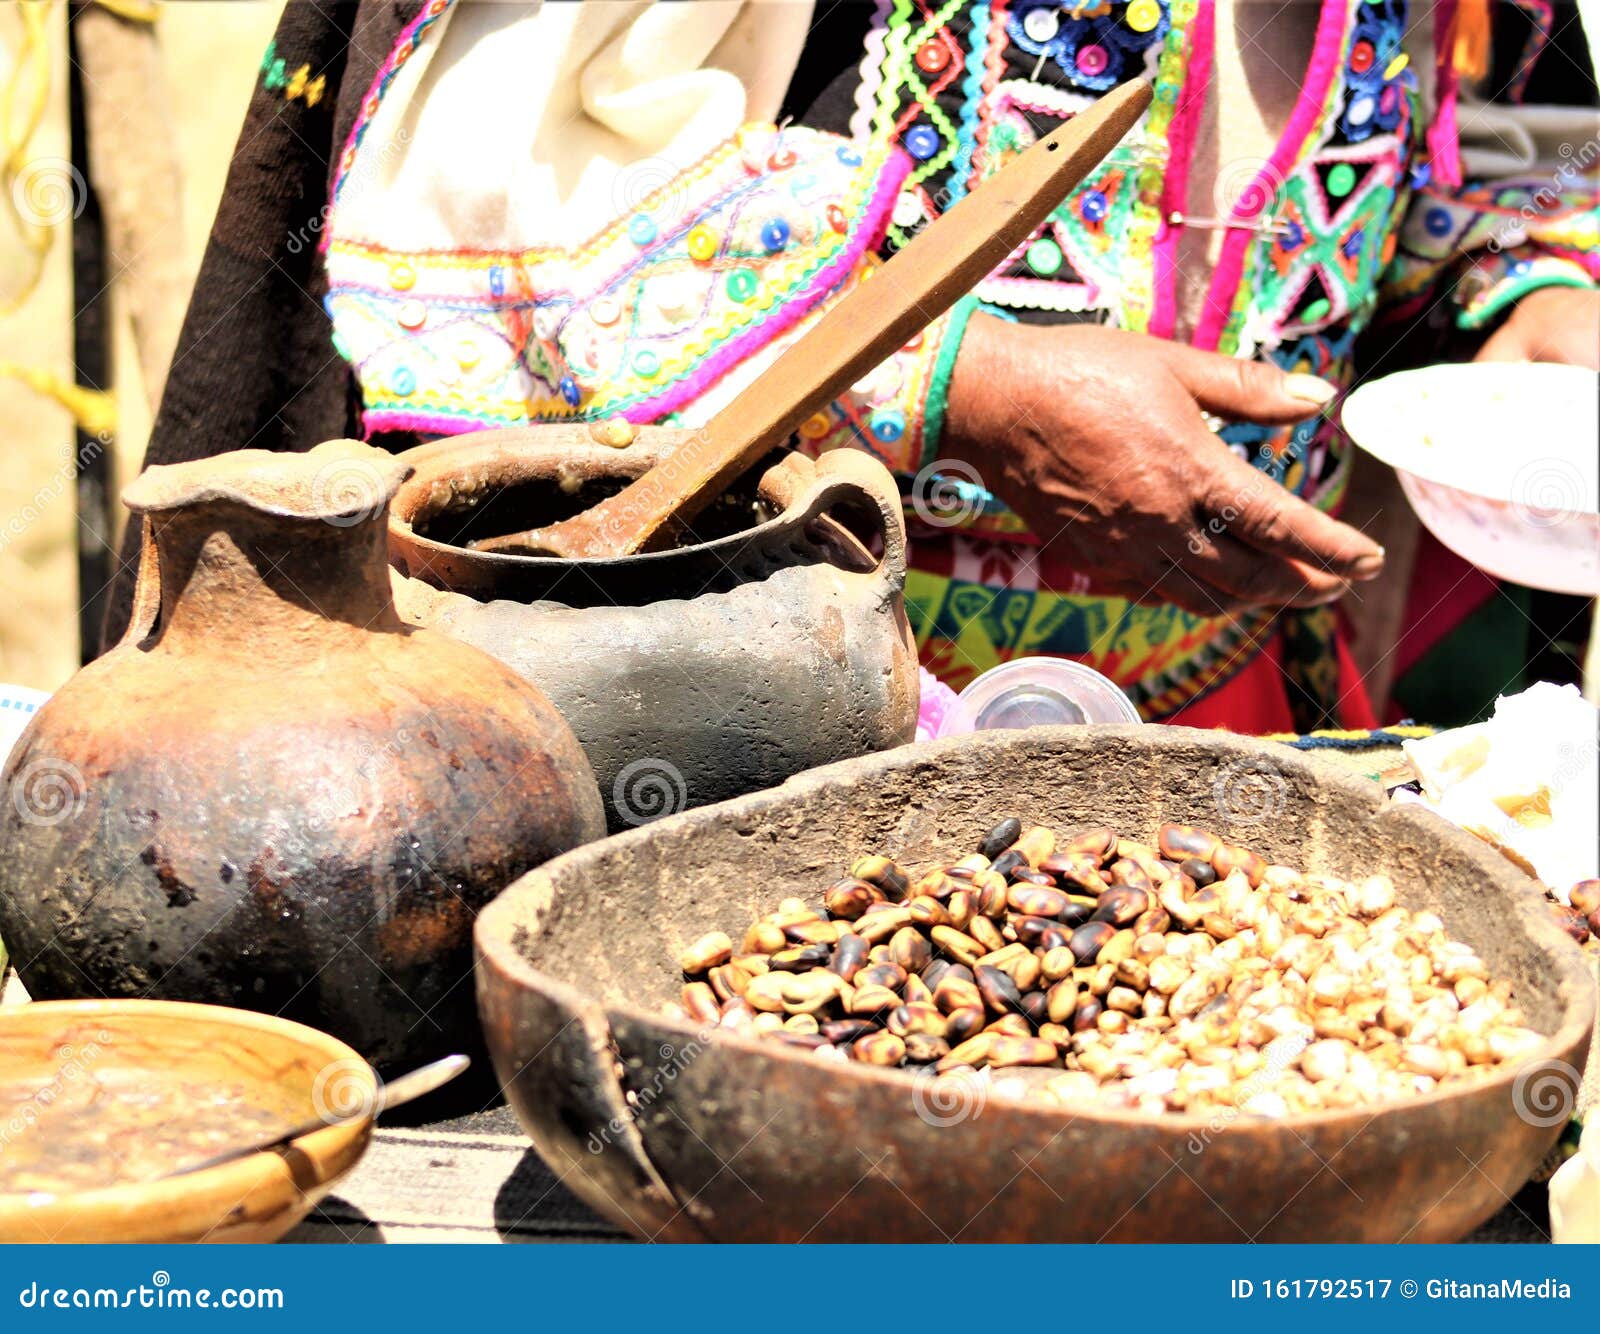 bolivia native cloth & food